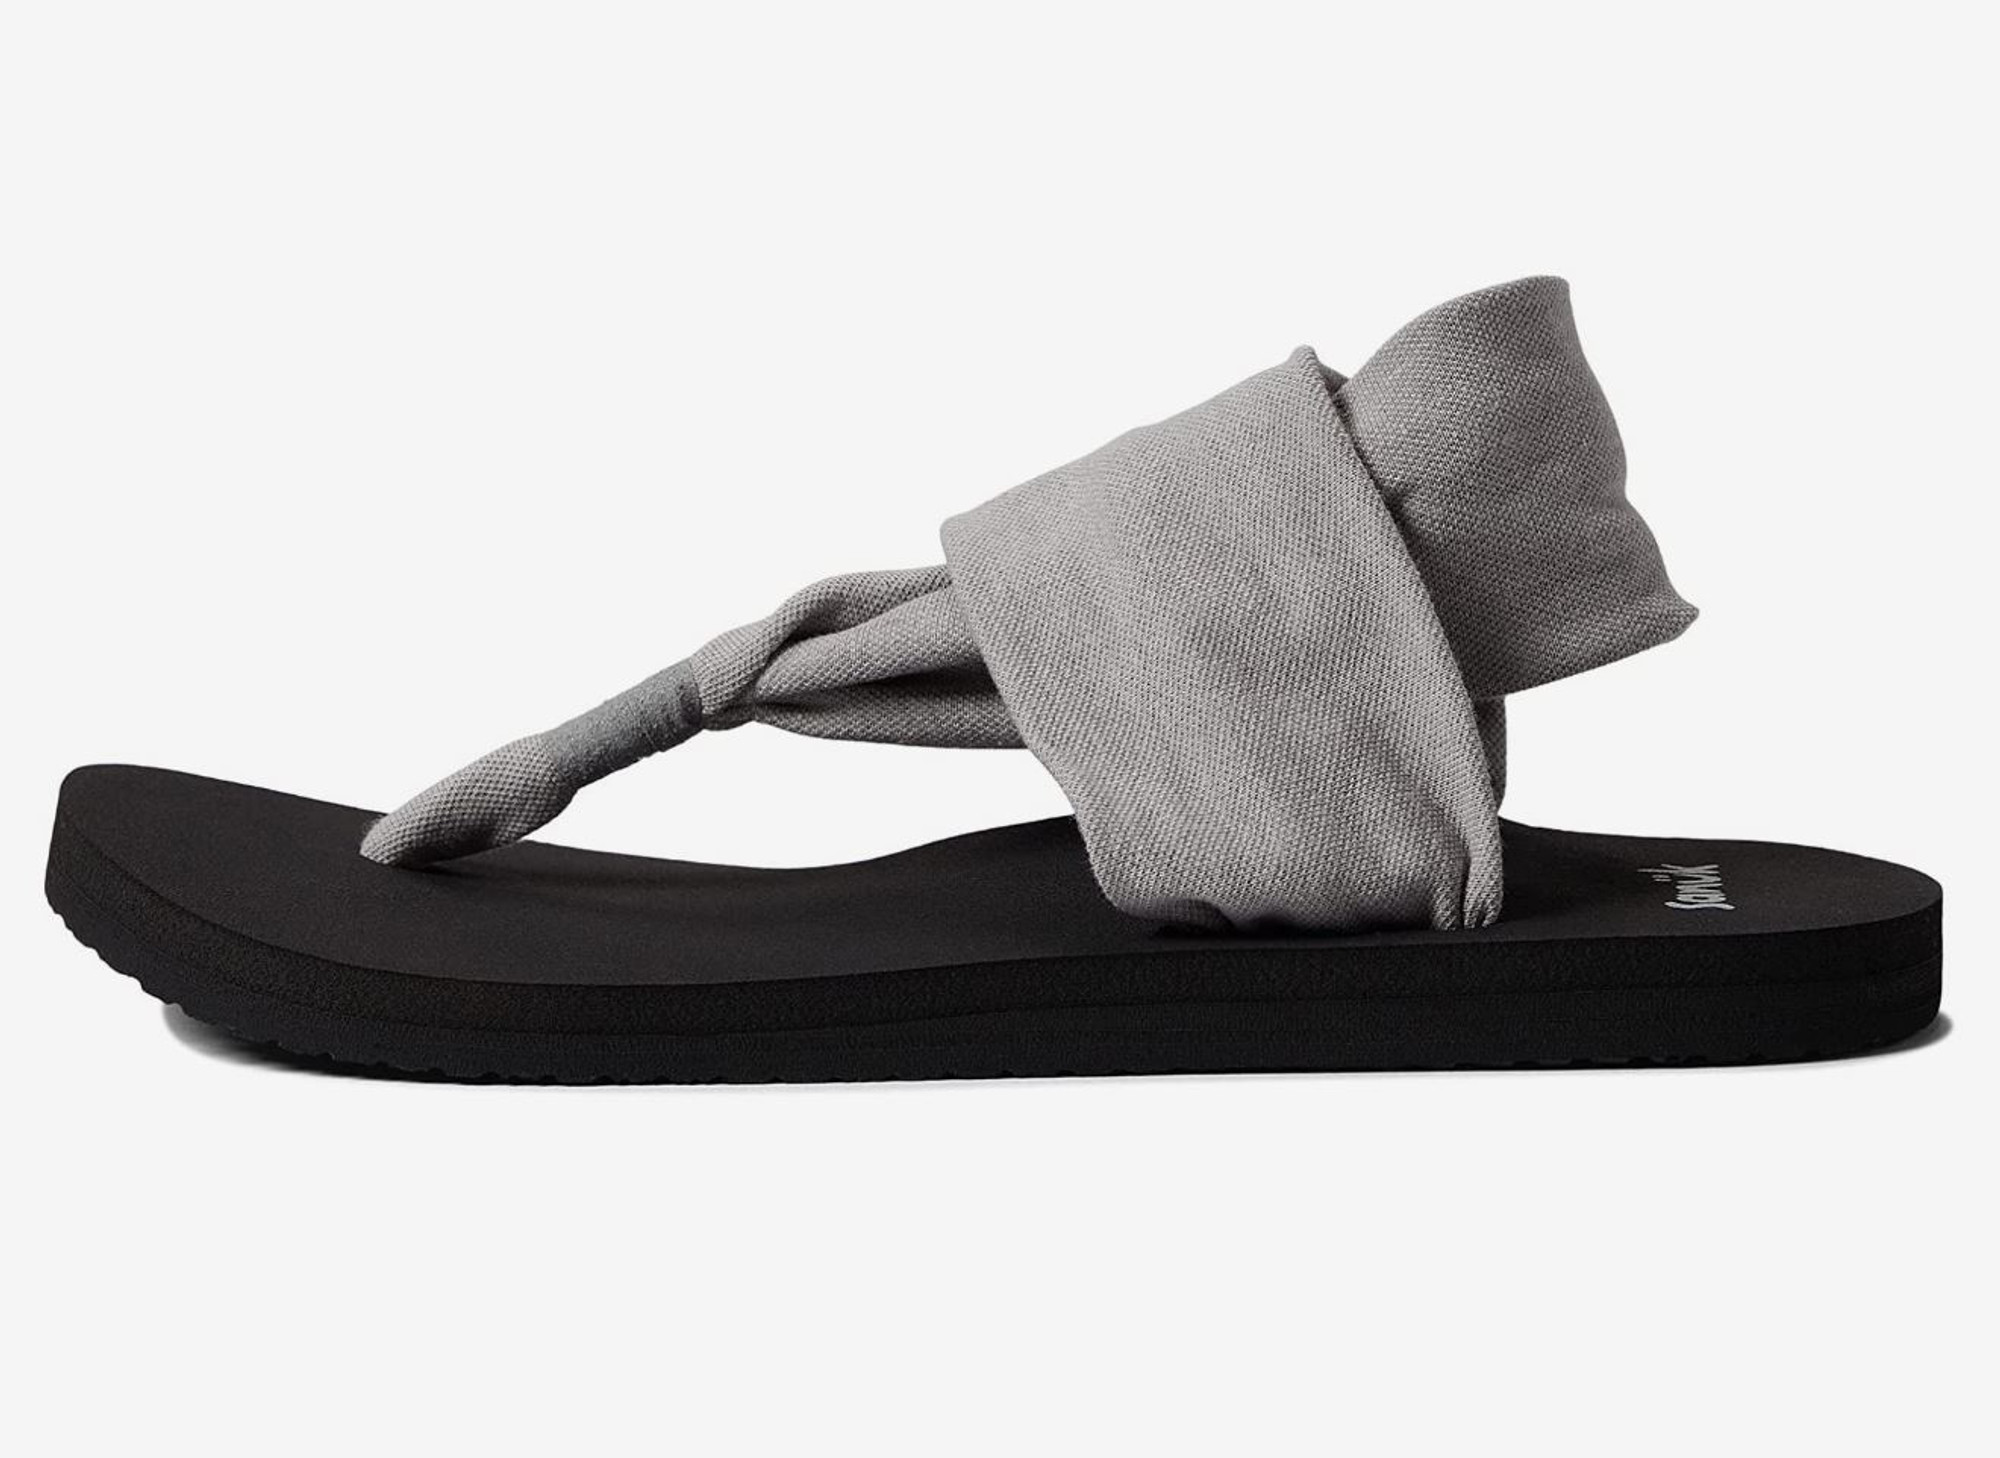 Sanuk Yoga Slingshot Sandals Size 11 Women's Black Tan Leopard Print  Strappy